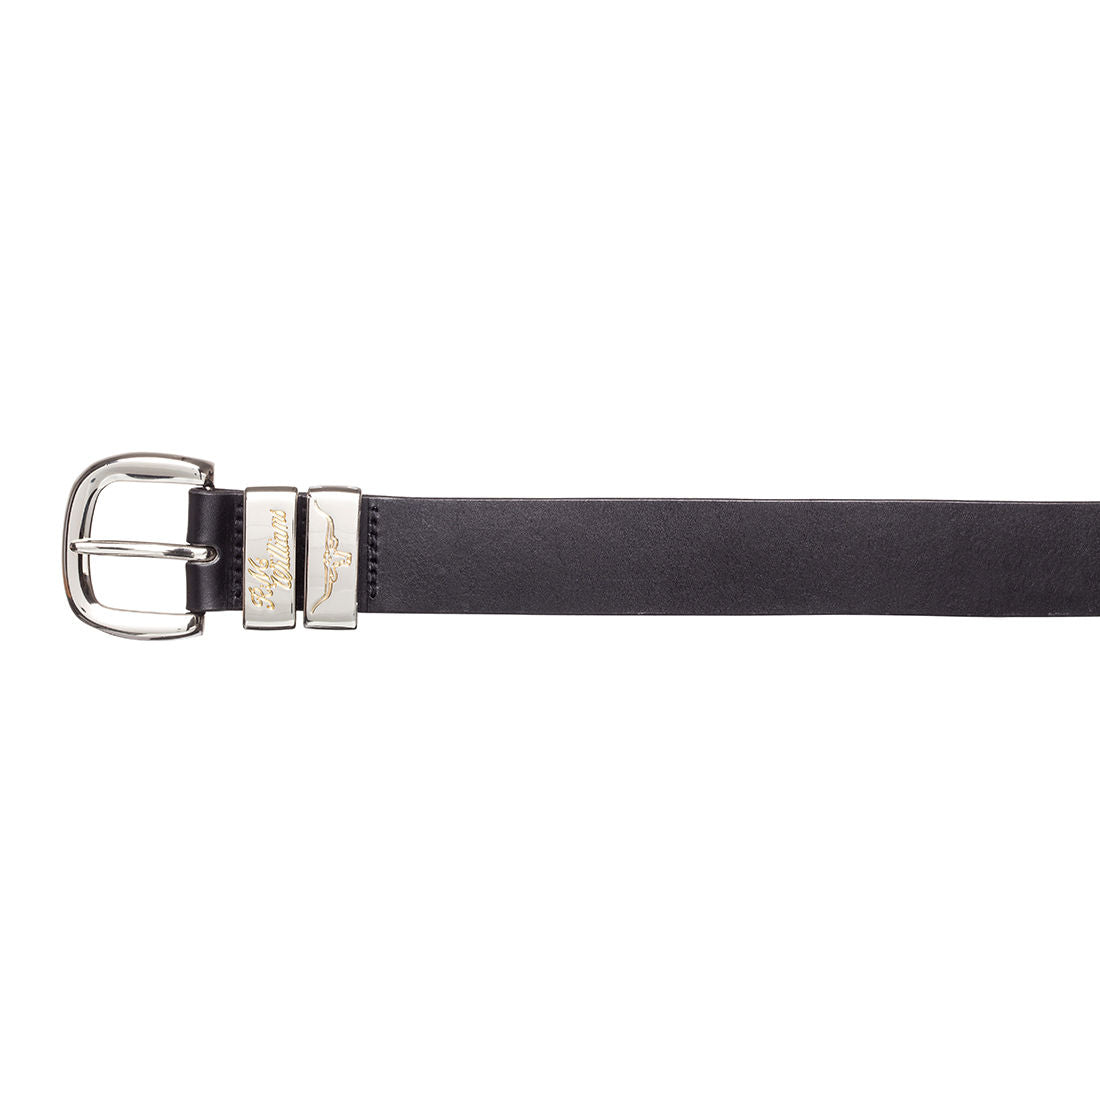 Jerrawa Leather Belt - Black